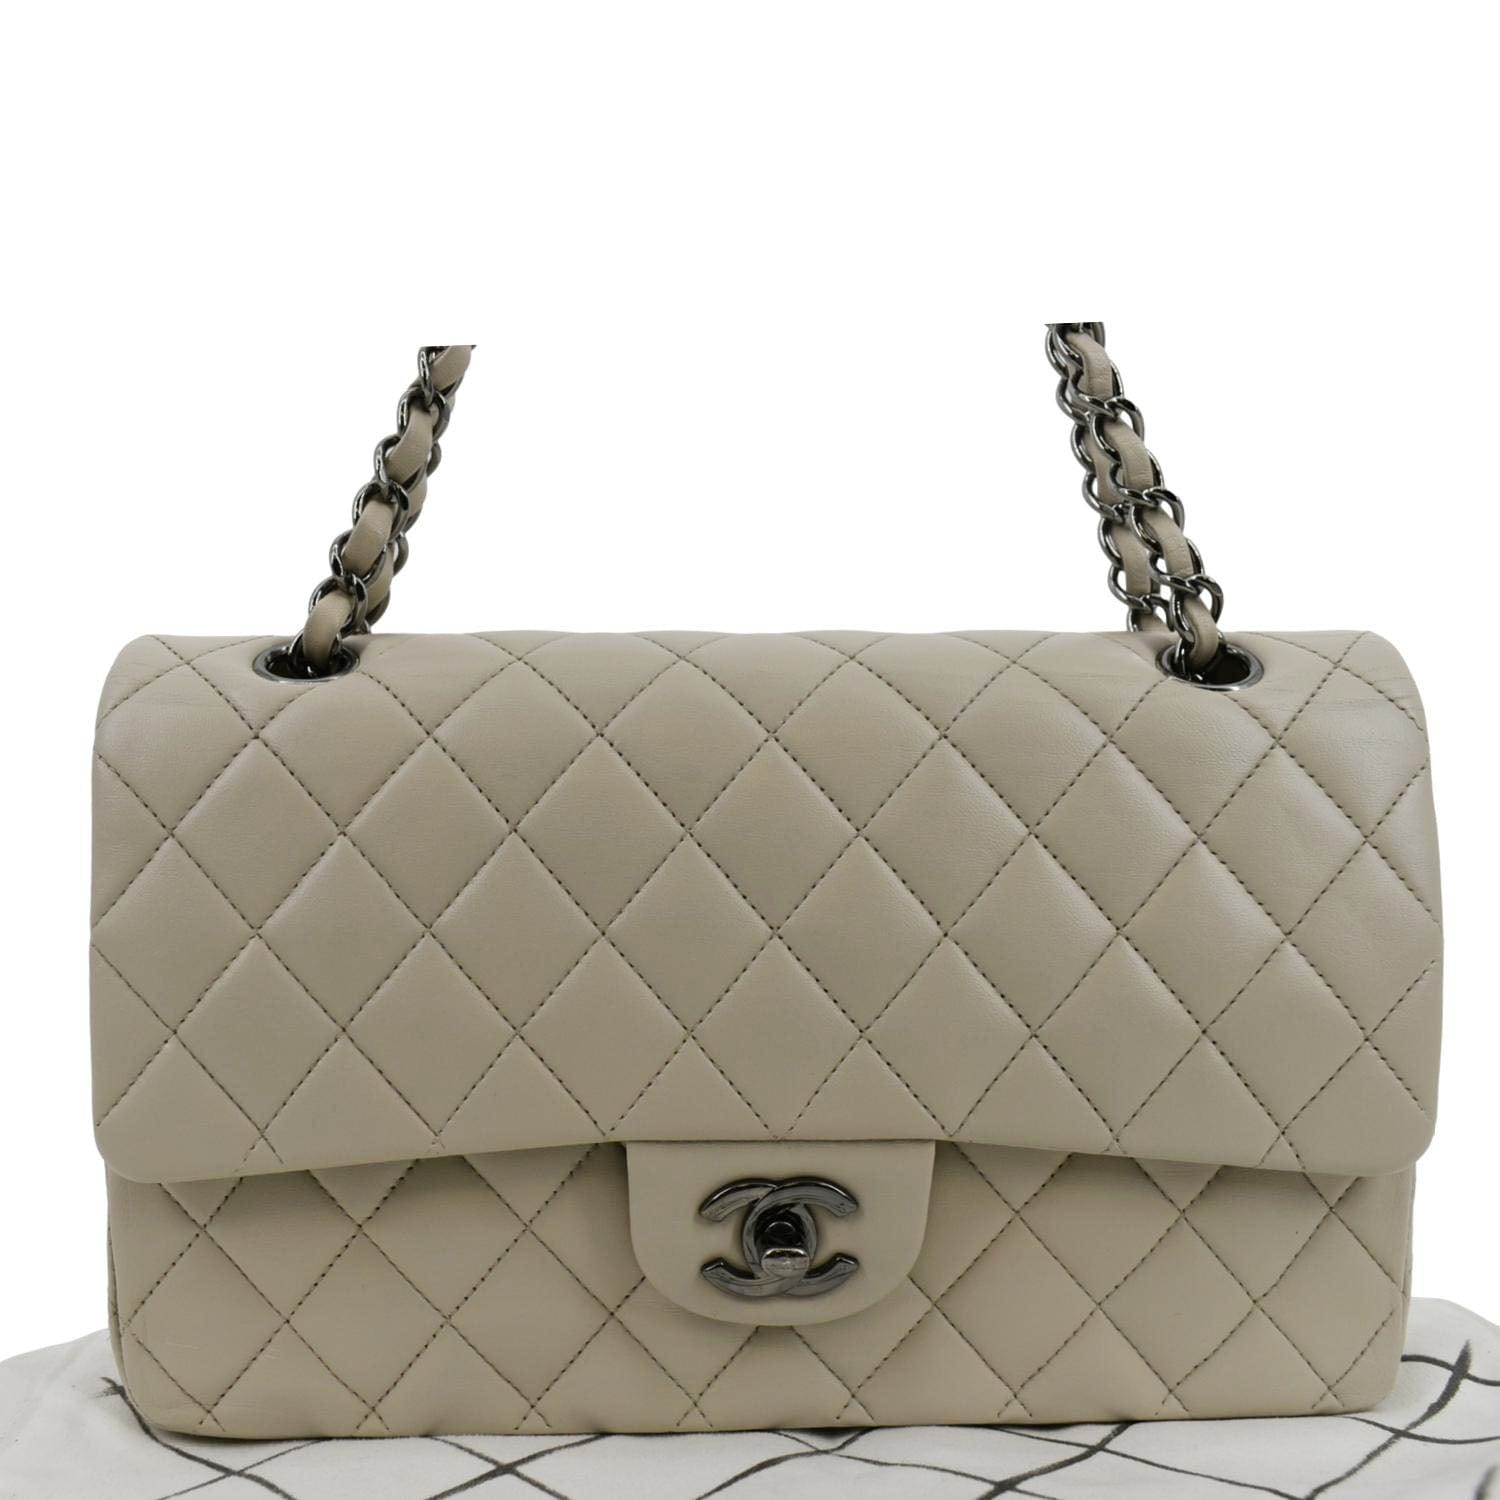 CHANEL, Bags, Chanel Beige Classic Medium Double Flap Bag